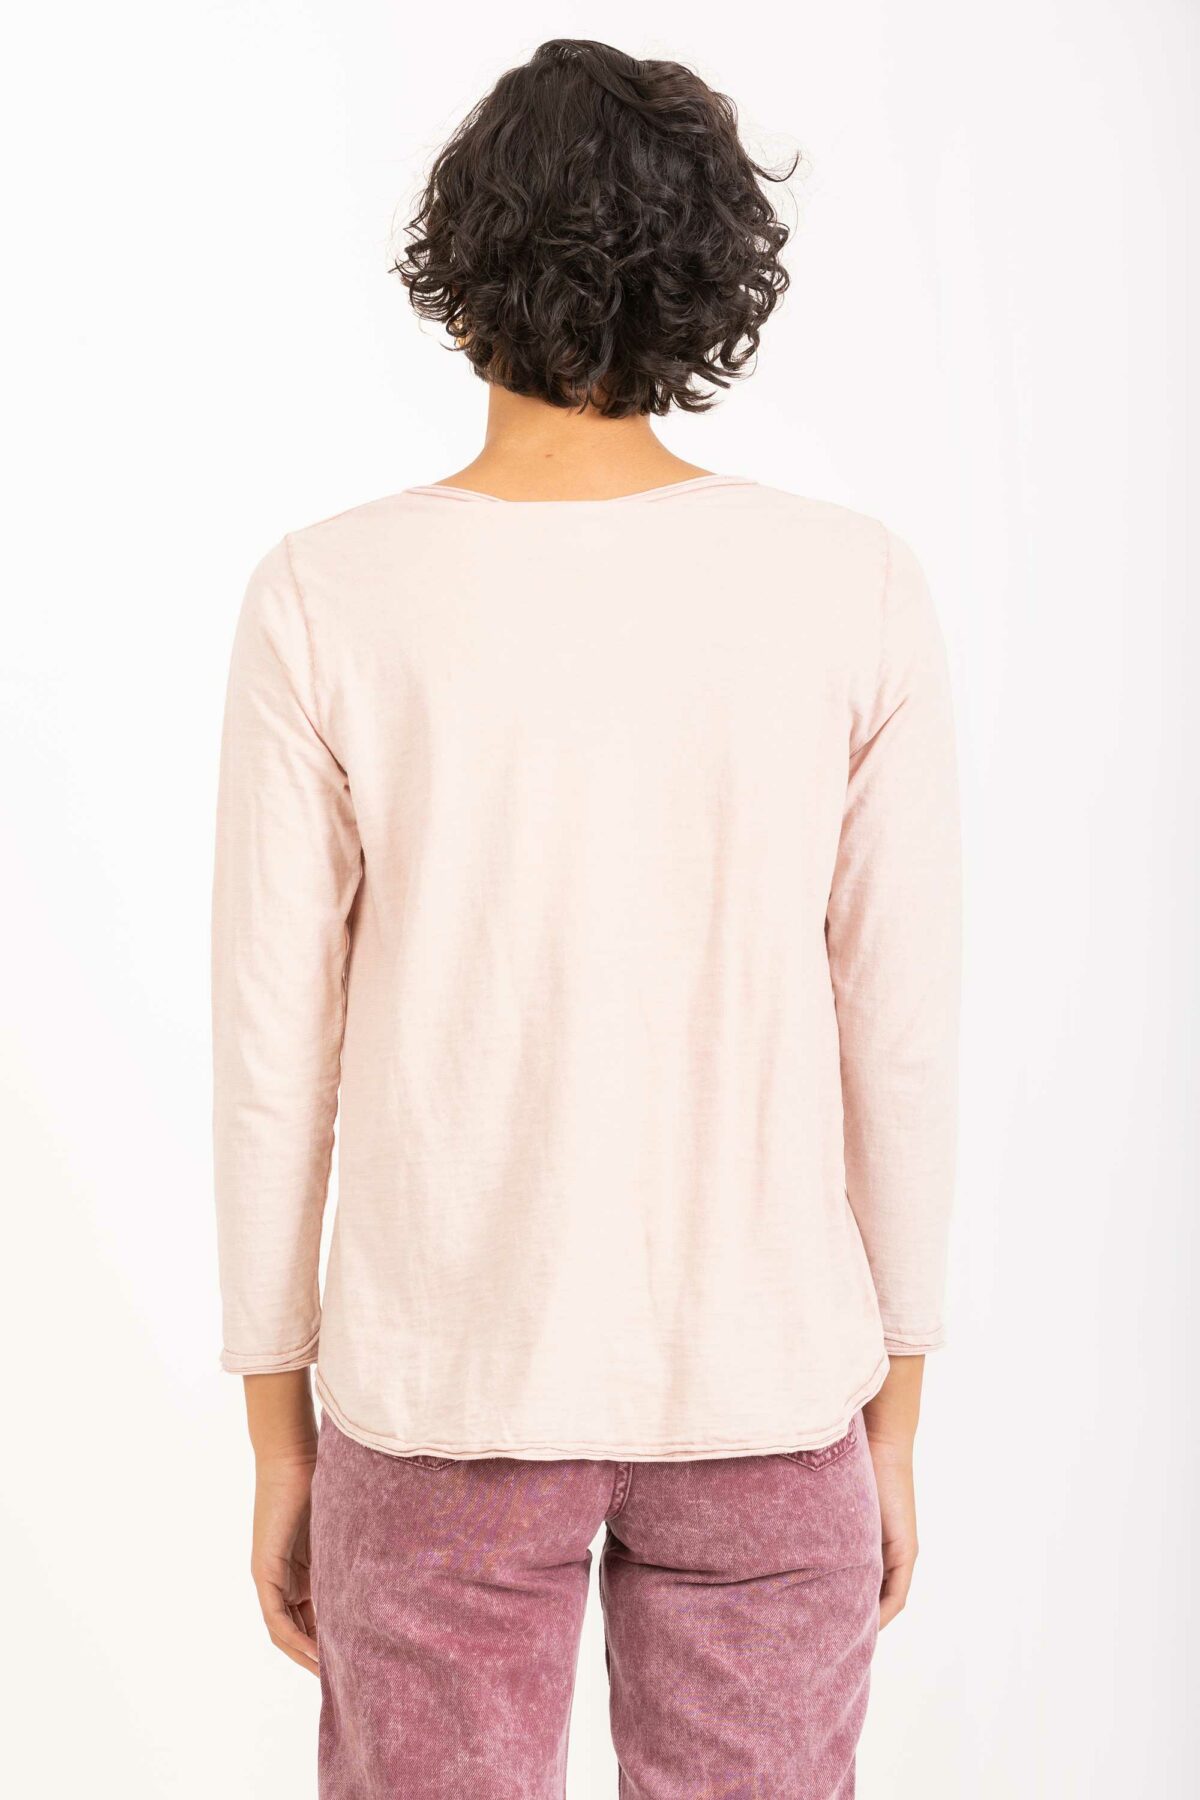 freddy-pink-cotton-top-long-sleeves-crossley-matchboxathens